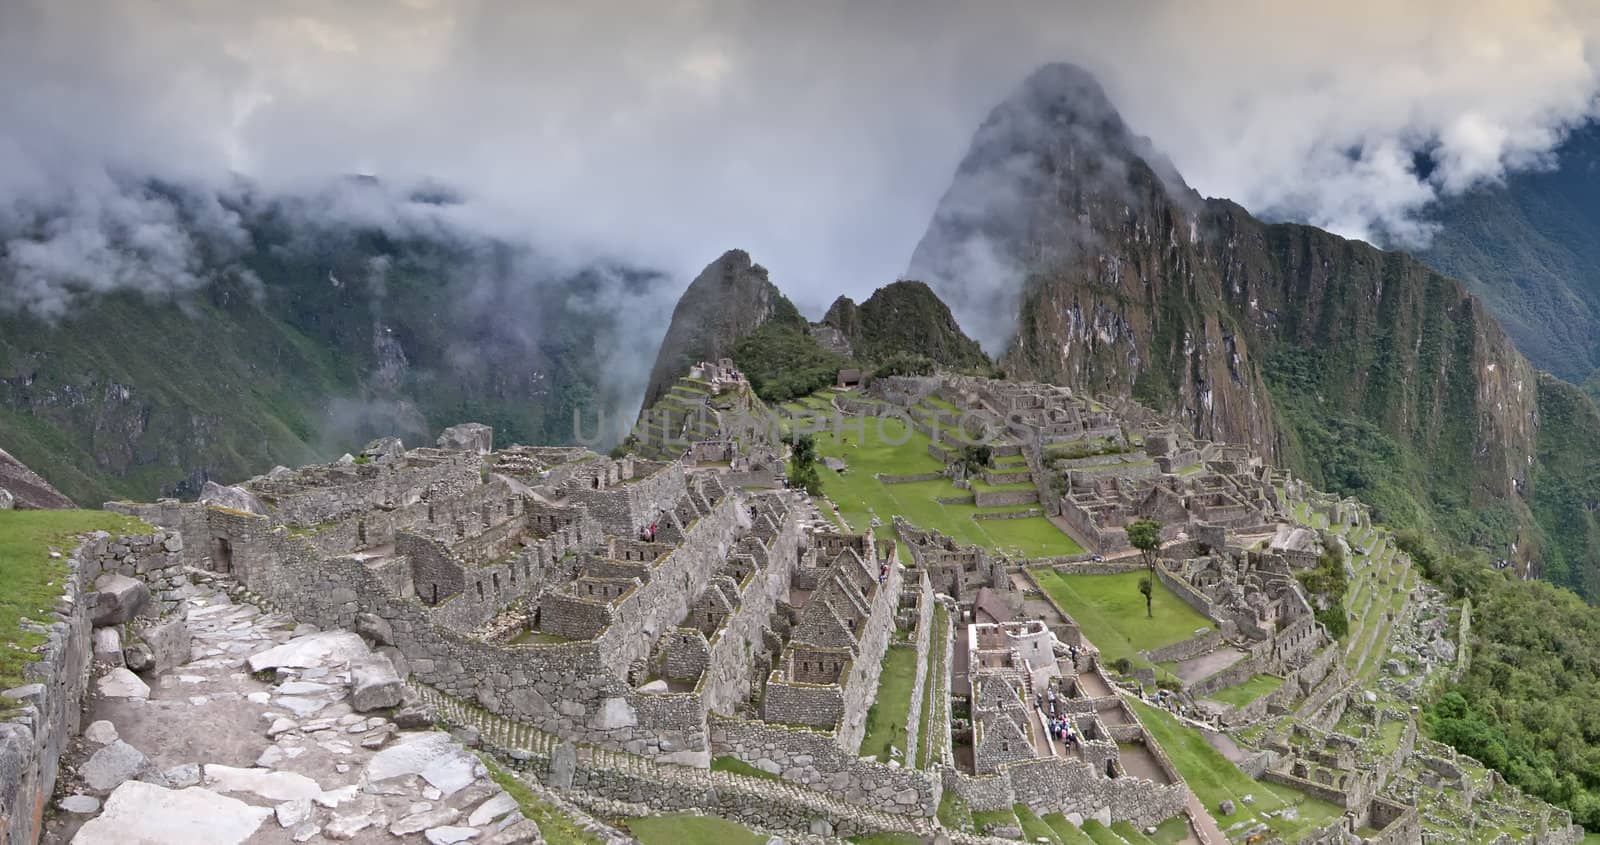 Machu Picchu (Old Mountain) - The Lost City of the Incas in Peru